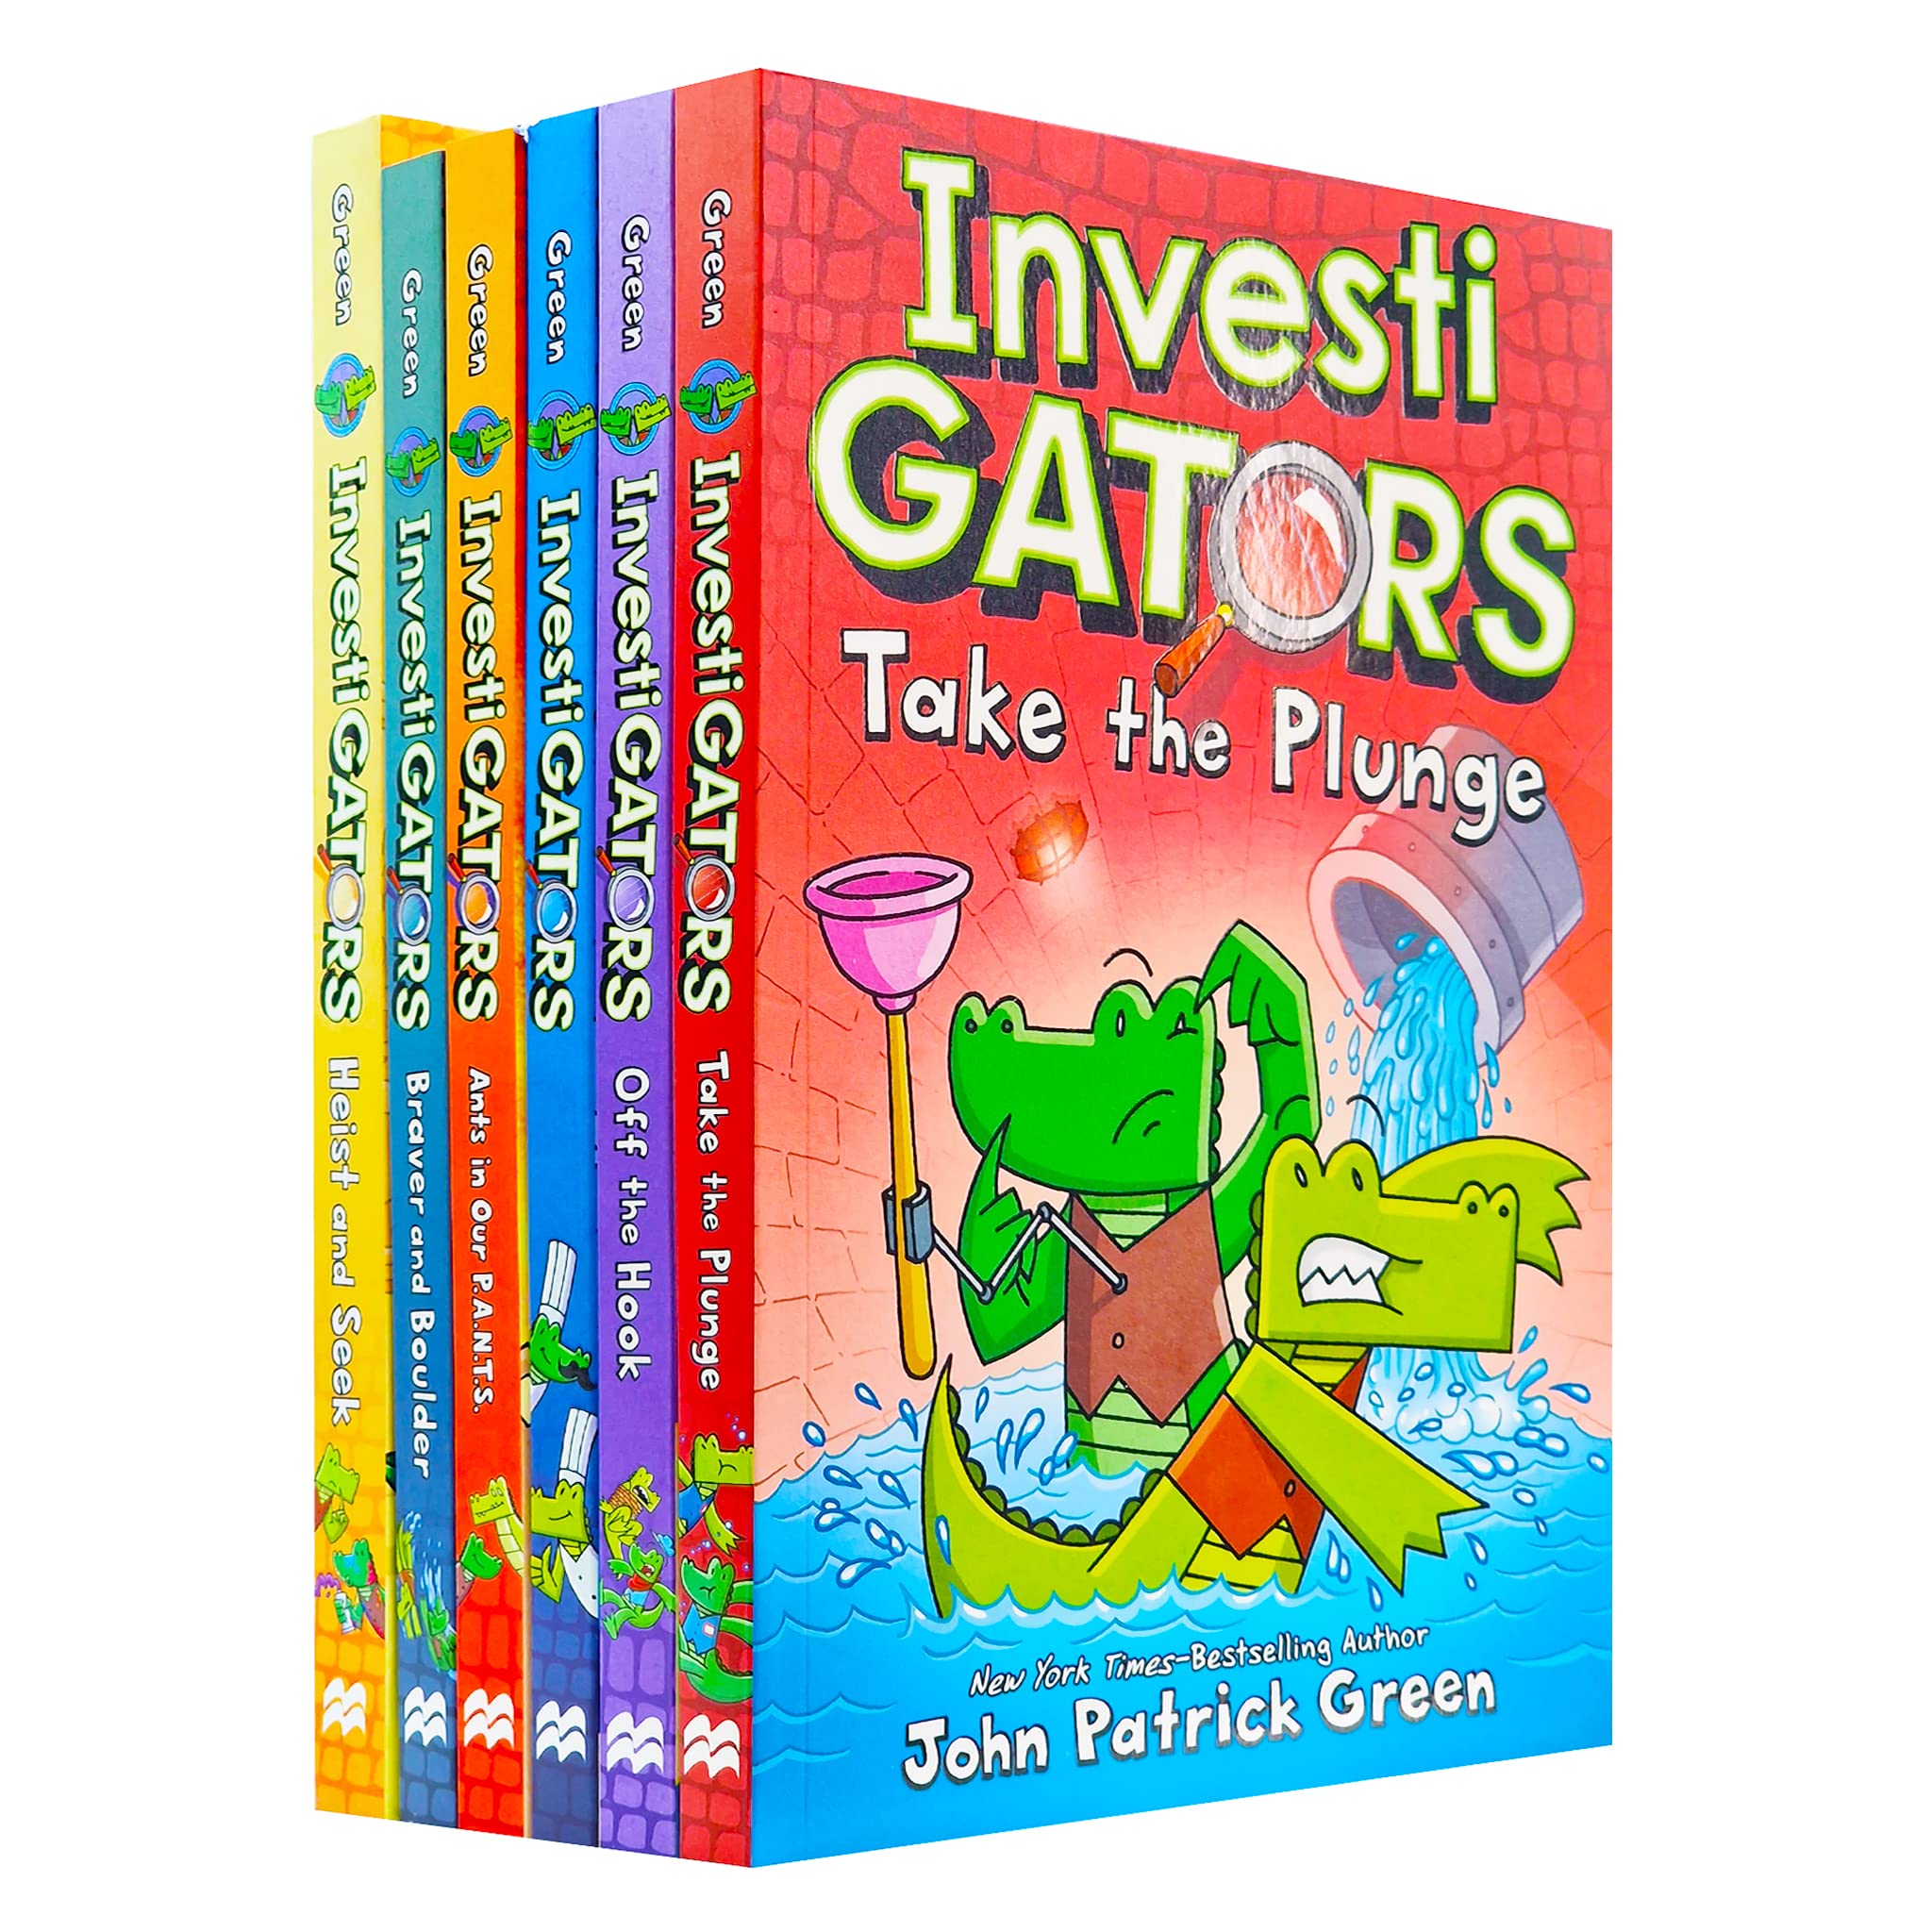 InvestiGators Series 4 Books Collection Box Set By John Patrick Green